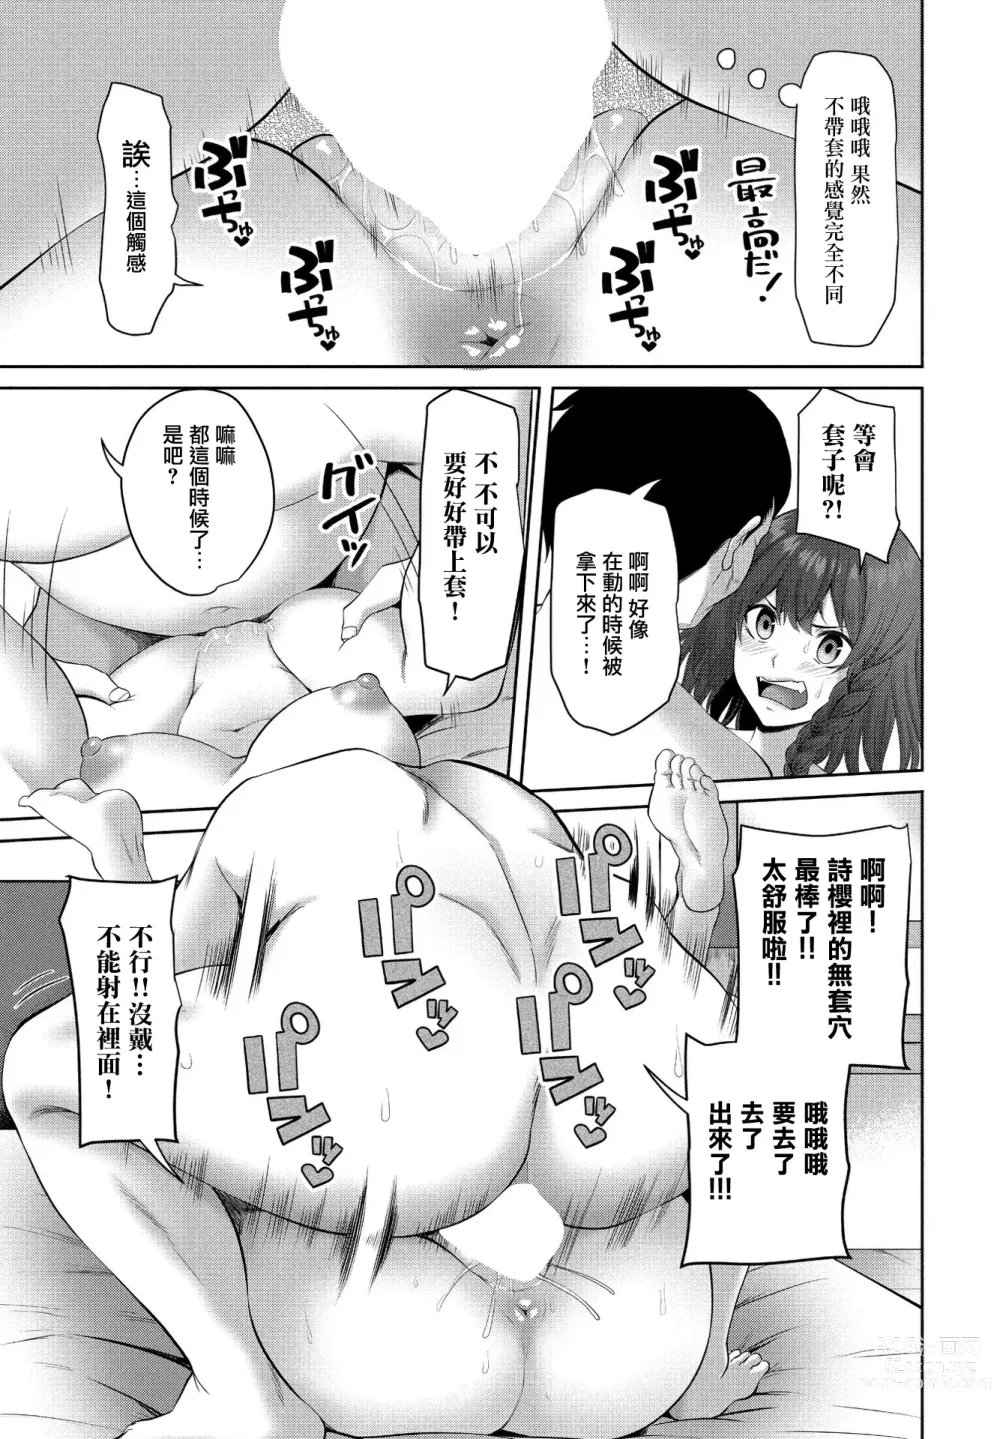 Page 13 of manga Chotto Kiite yo! Ch. 1